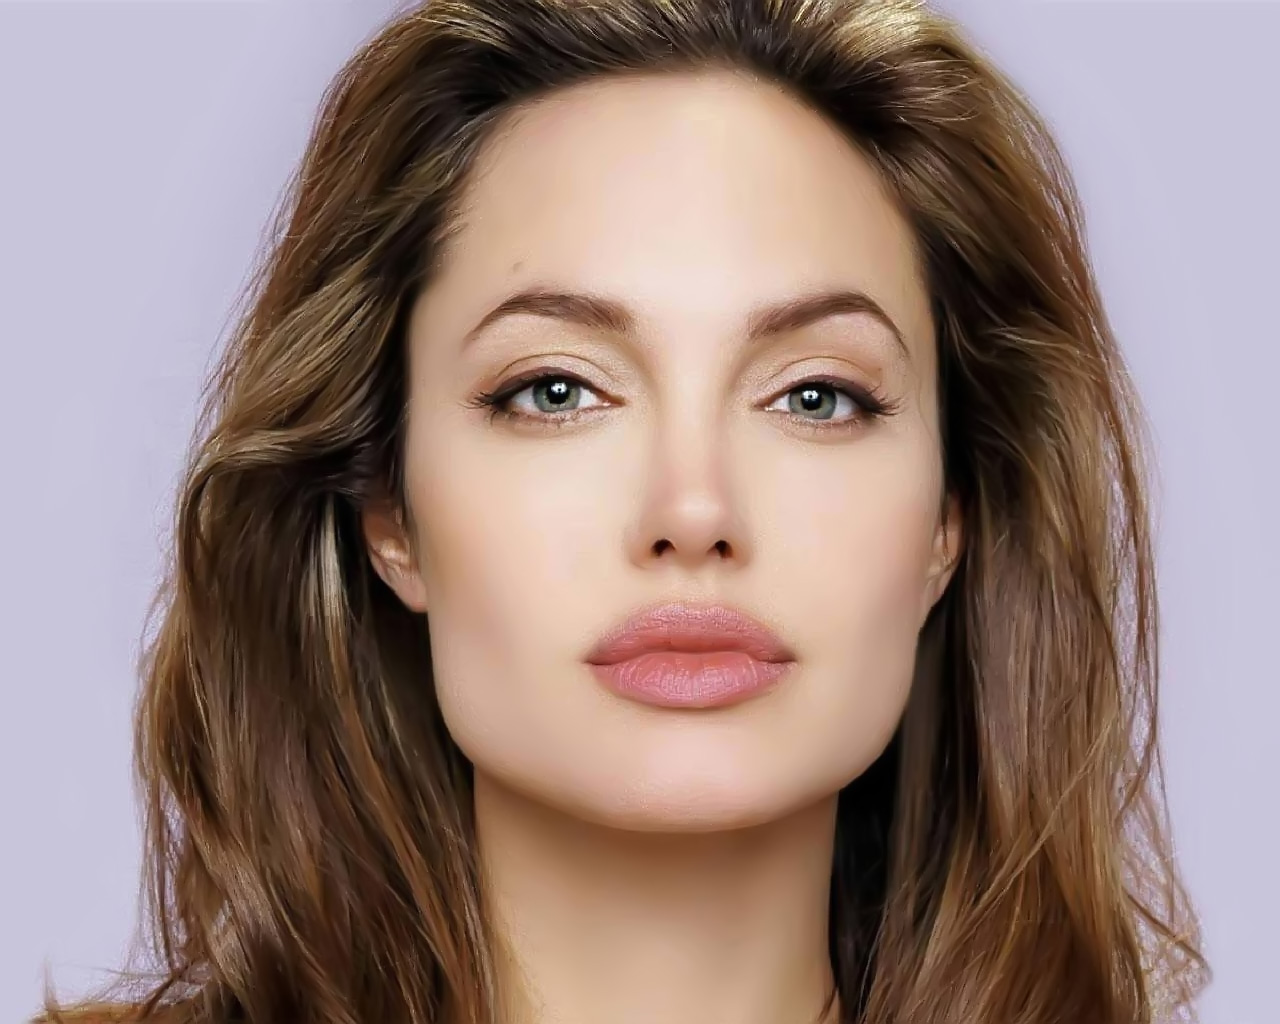 https://blogger.googleusercontent.com/img/b/R29vZ2xl/AVvXsEhOKGufOCwCM158DB3pkbAl6tZU1svQr5vAJARowy7Eh0nNKNxaFBvztDtK1H3T3IYaOSAA9PEFLZ55C569HB3sBfer760fPdM6H-5I6nUTxalX7s9awbRr-22jkF_IpVj1BEP4UJc_Fgg/s1600/Angelina+Jolie3.jpg